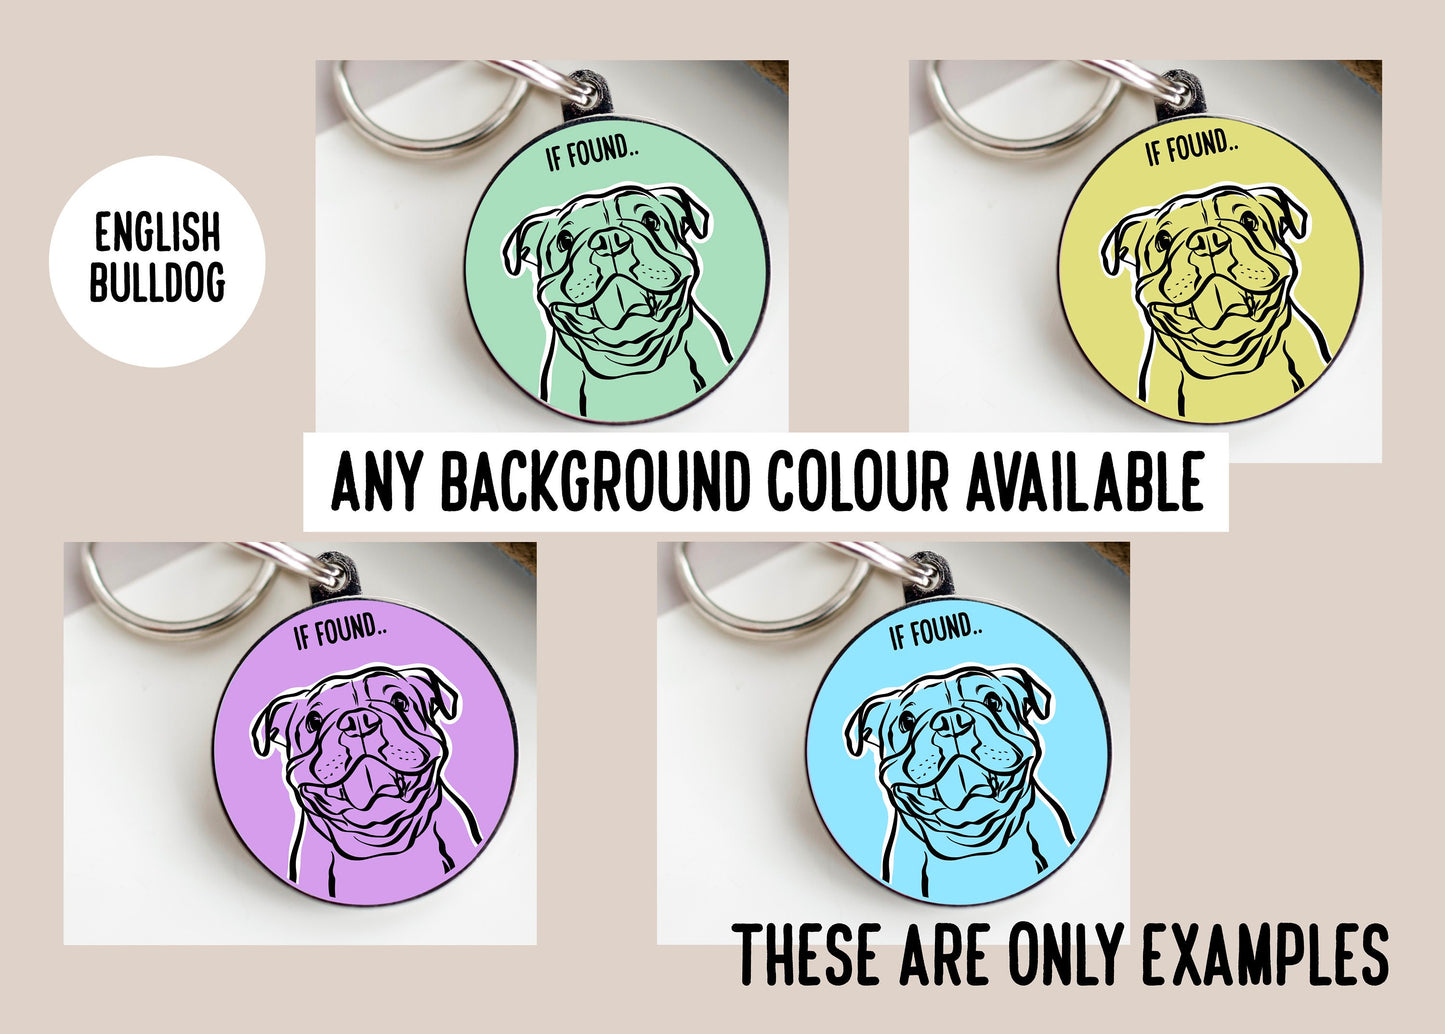 English Bulldog Outline ID Tag/ Dog Breed Line Drawing Collar Tag/ Personalised Trendy Pet Charm/ Unique English Bulldog Gift/ Keepsake Gift